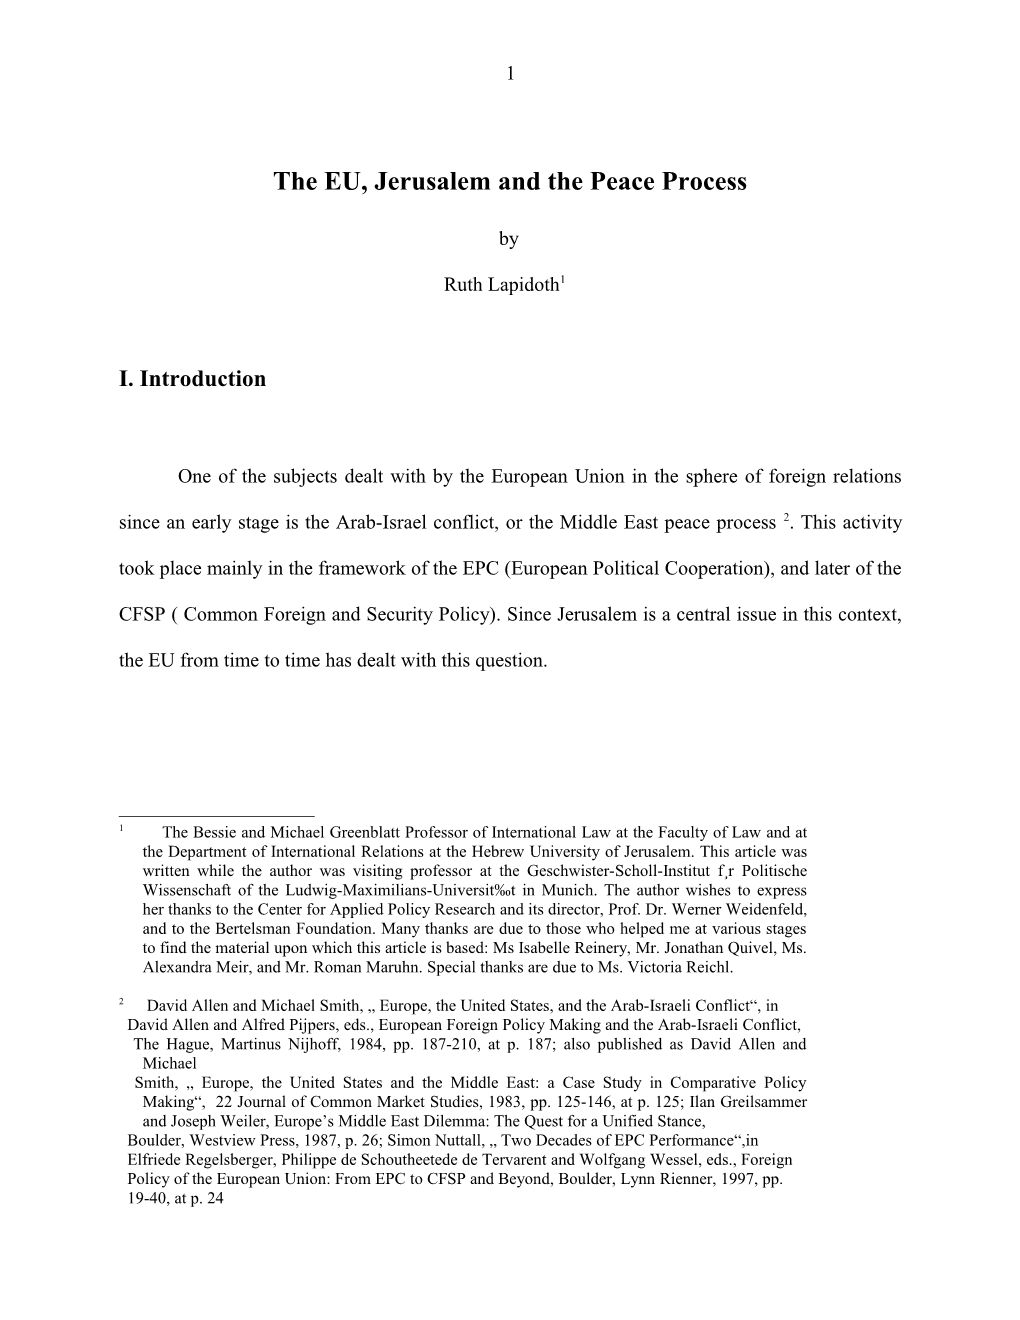 ___The EU, Jerusalem and the Peace Process